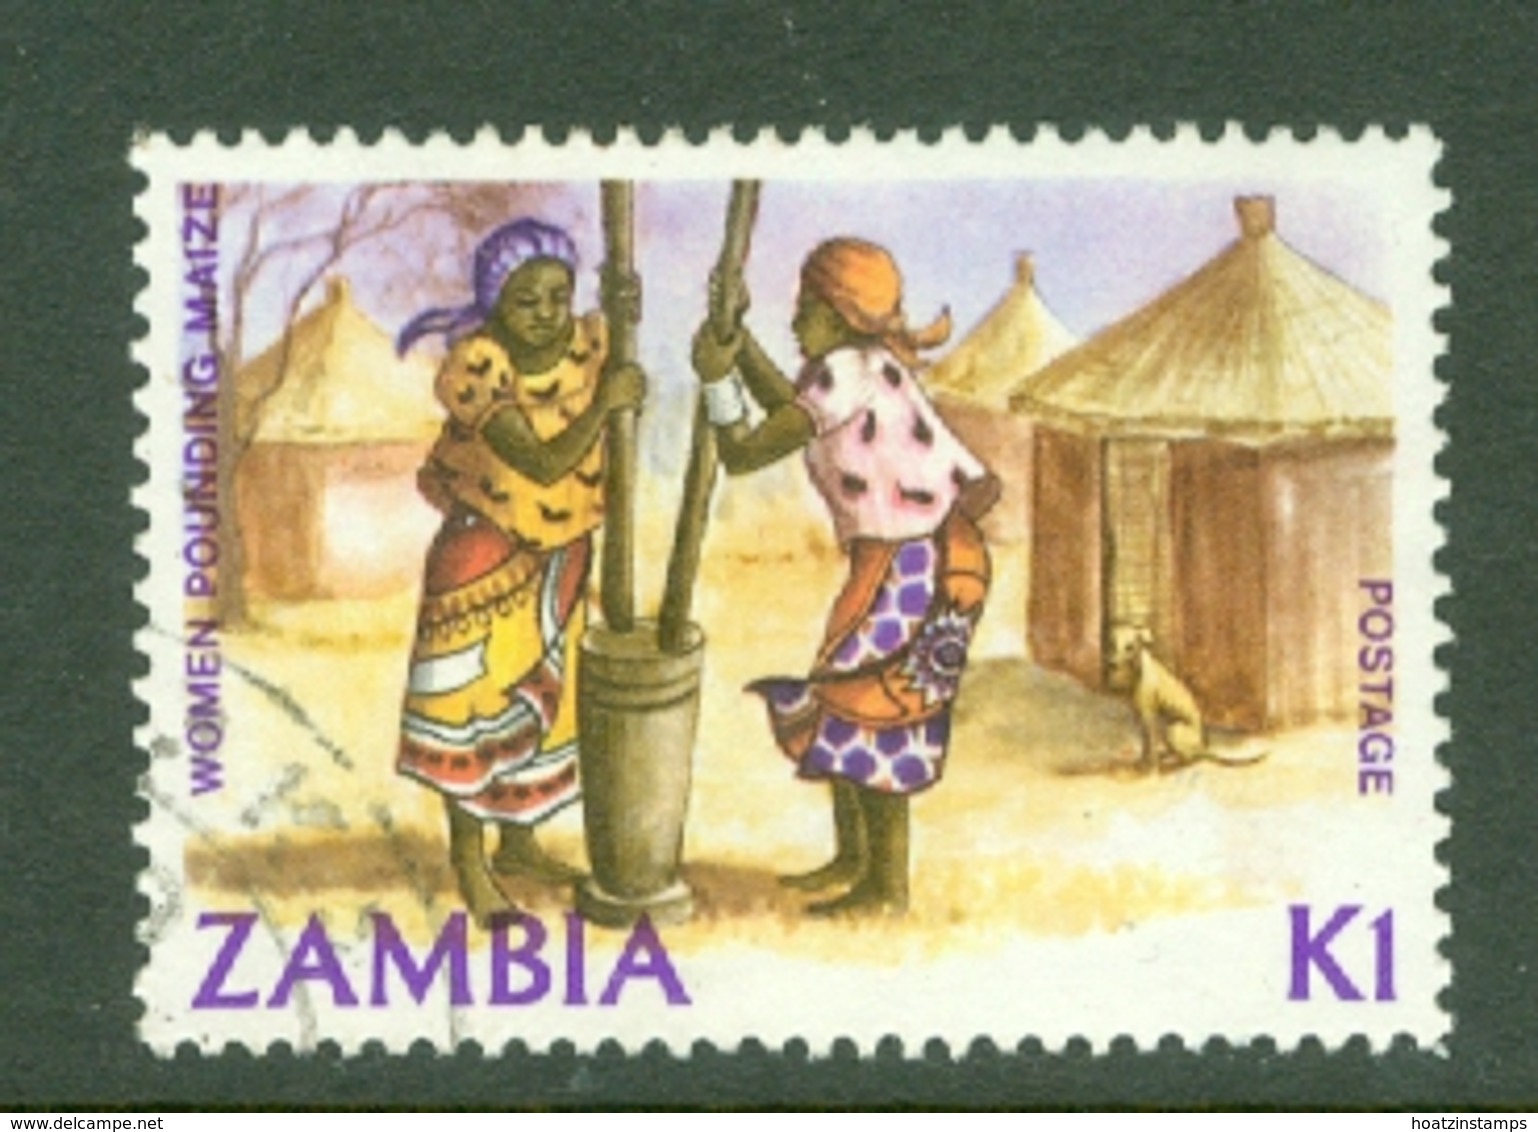 Zambia: 1981/83   Pictorial    SG350   K1     Used - Zambia (1965-...)